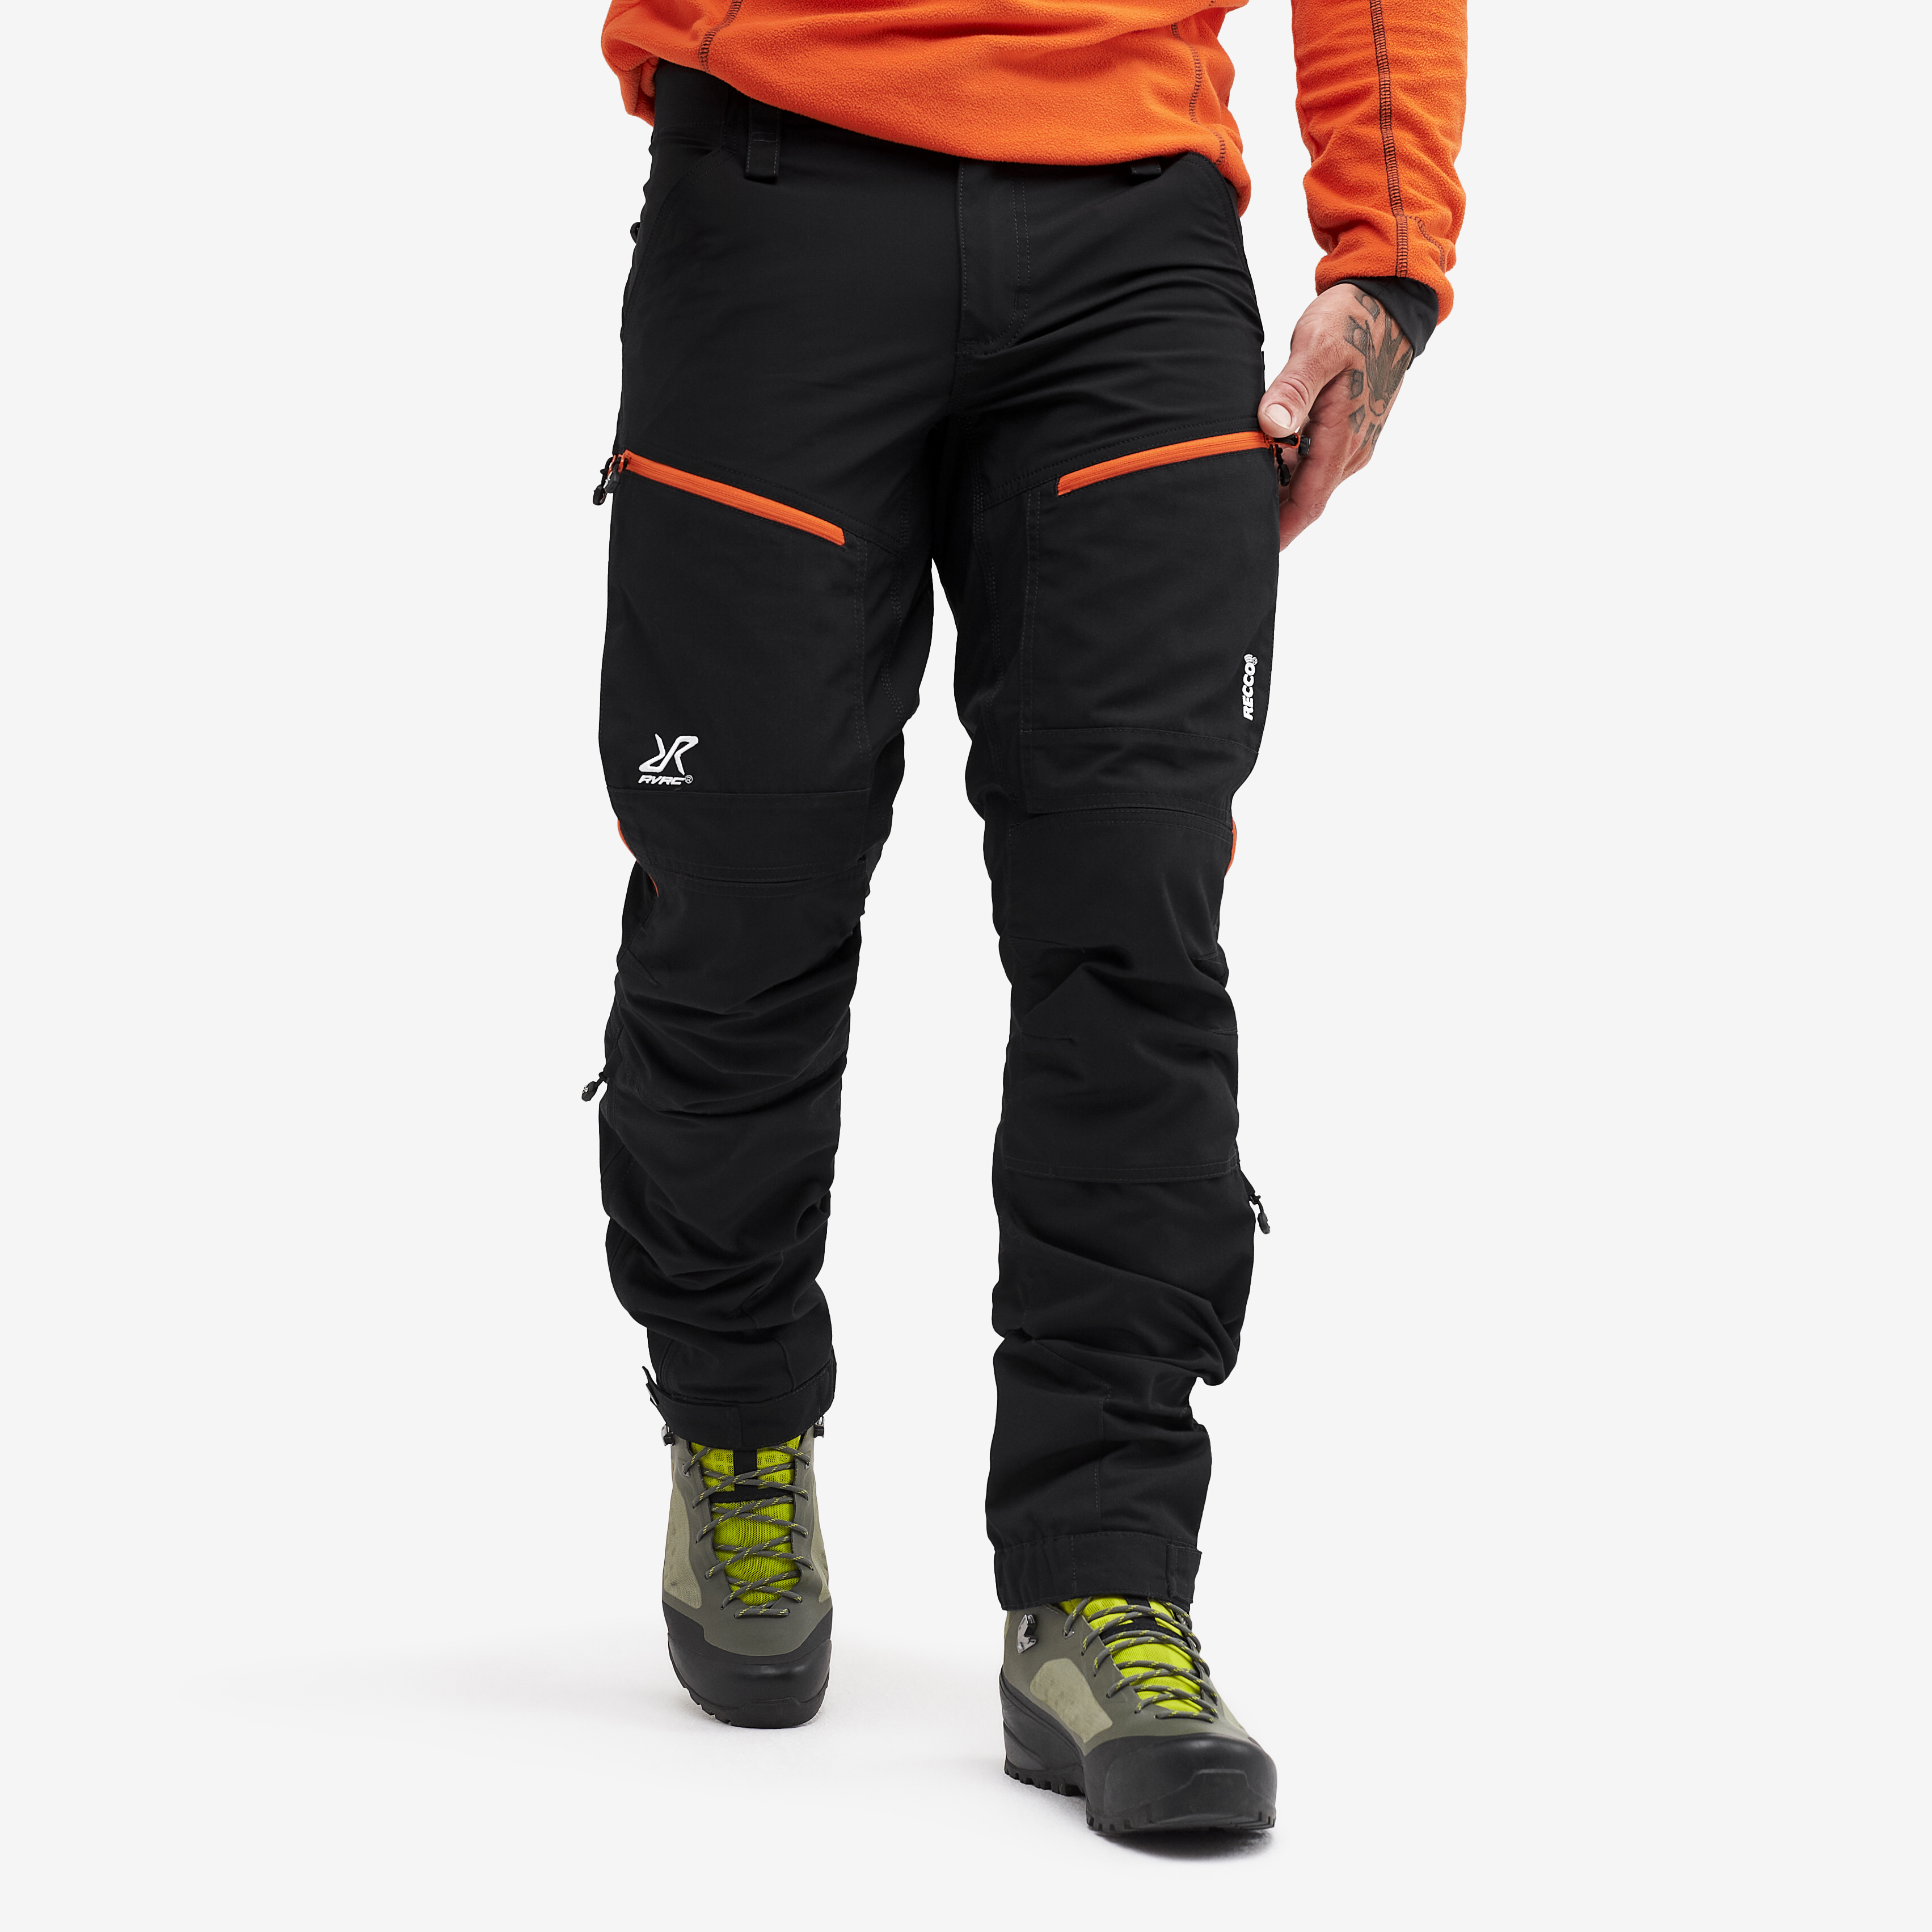 RVRC GP Pro Rescue Pants Black/Orange 2.0 Men